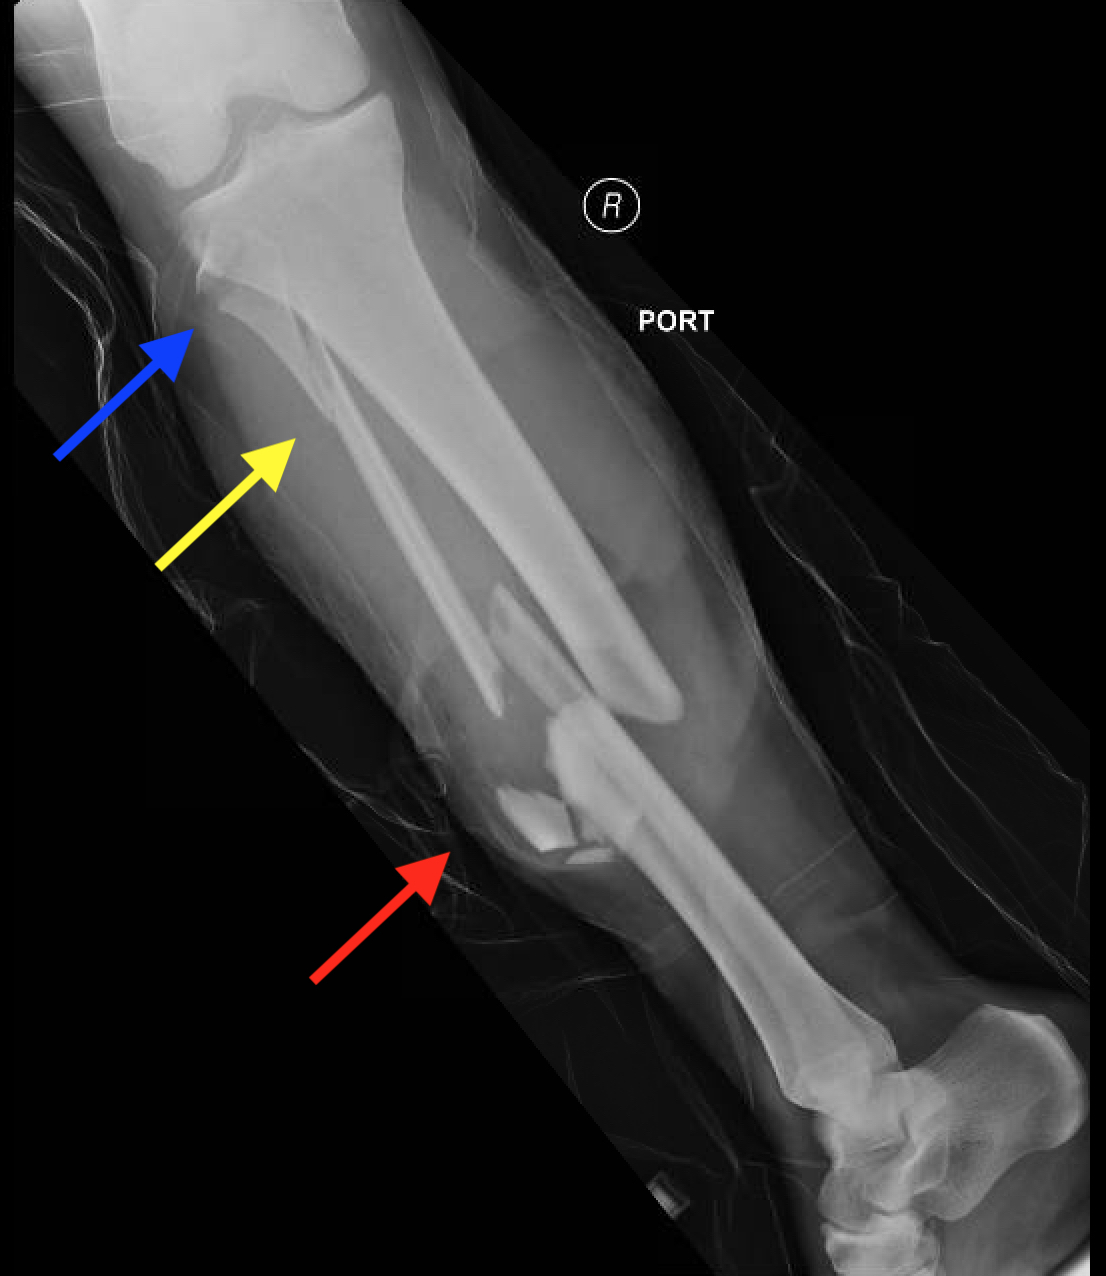 tibia and fibula fracture